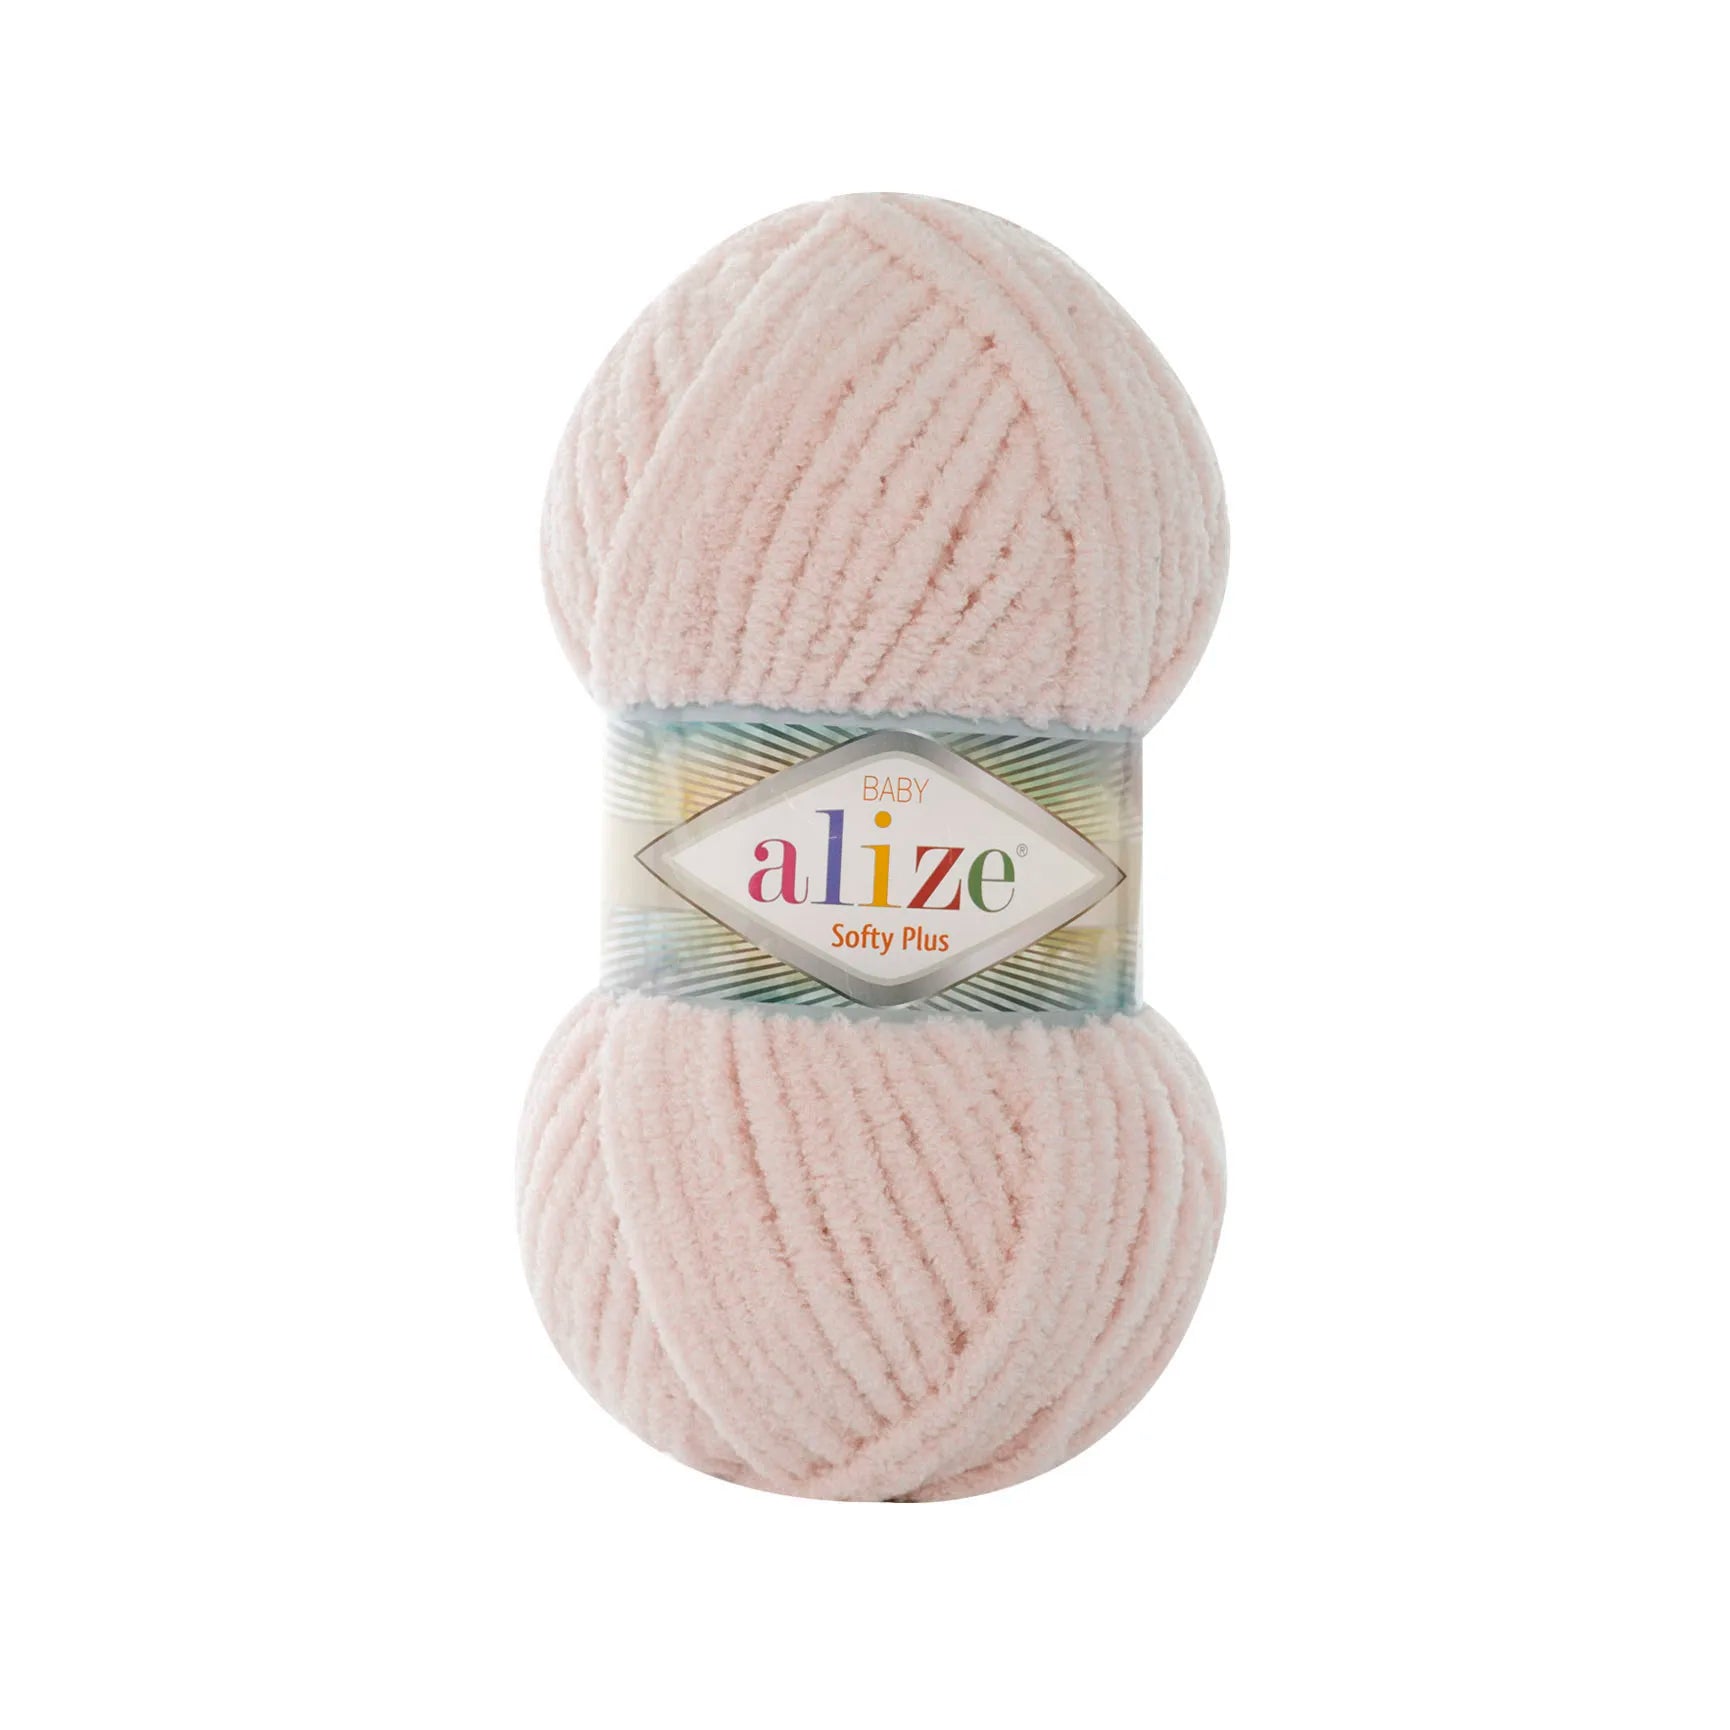 Alize Softy Plus Yarn Hobby Shopy Turkish Store Shop Hand Knitting Yarn 382